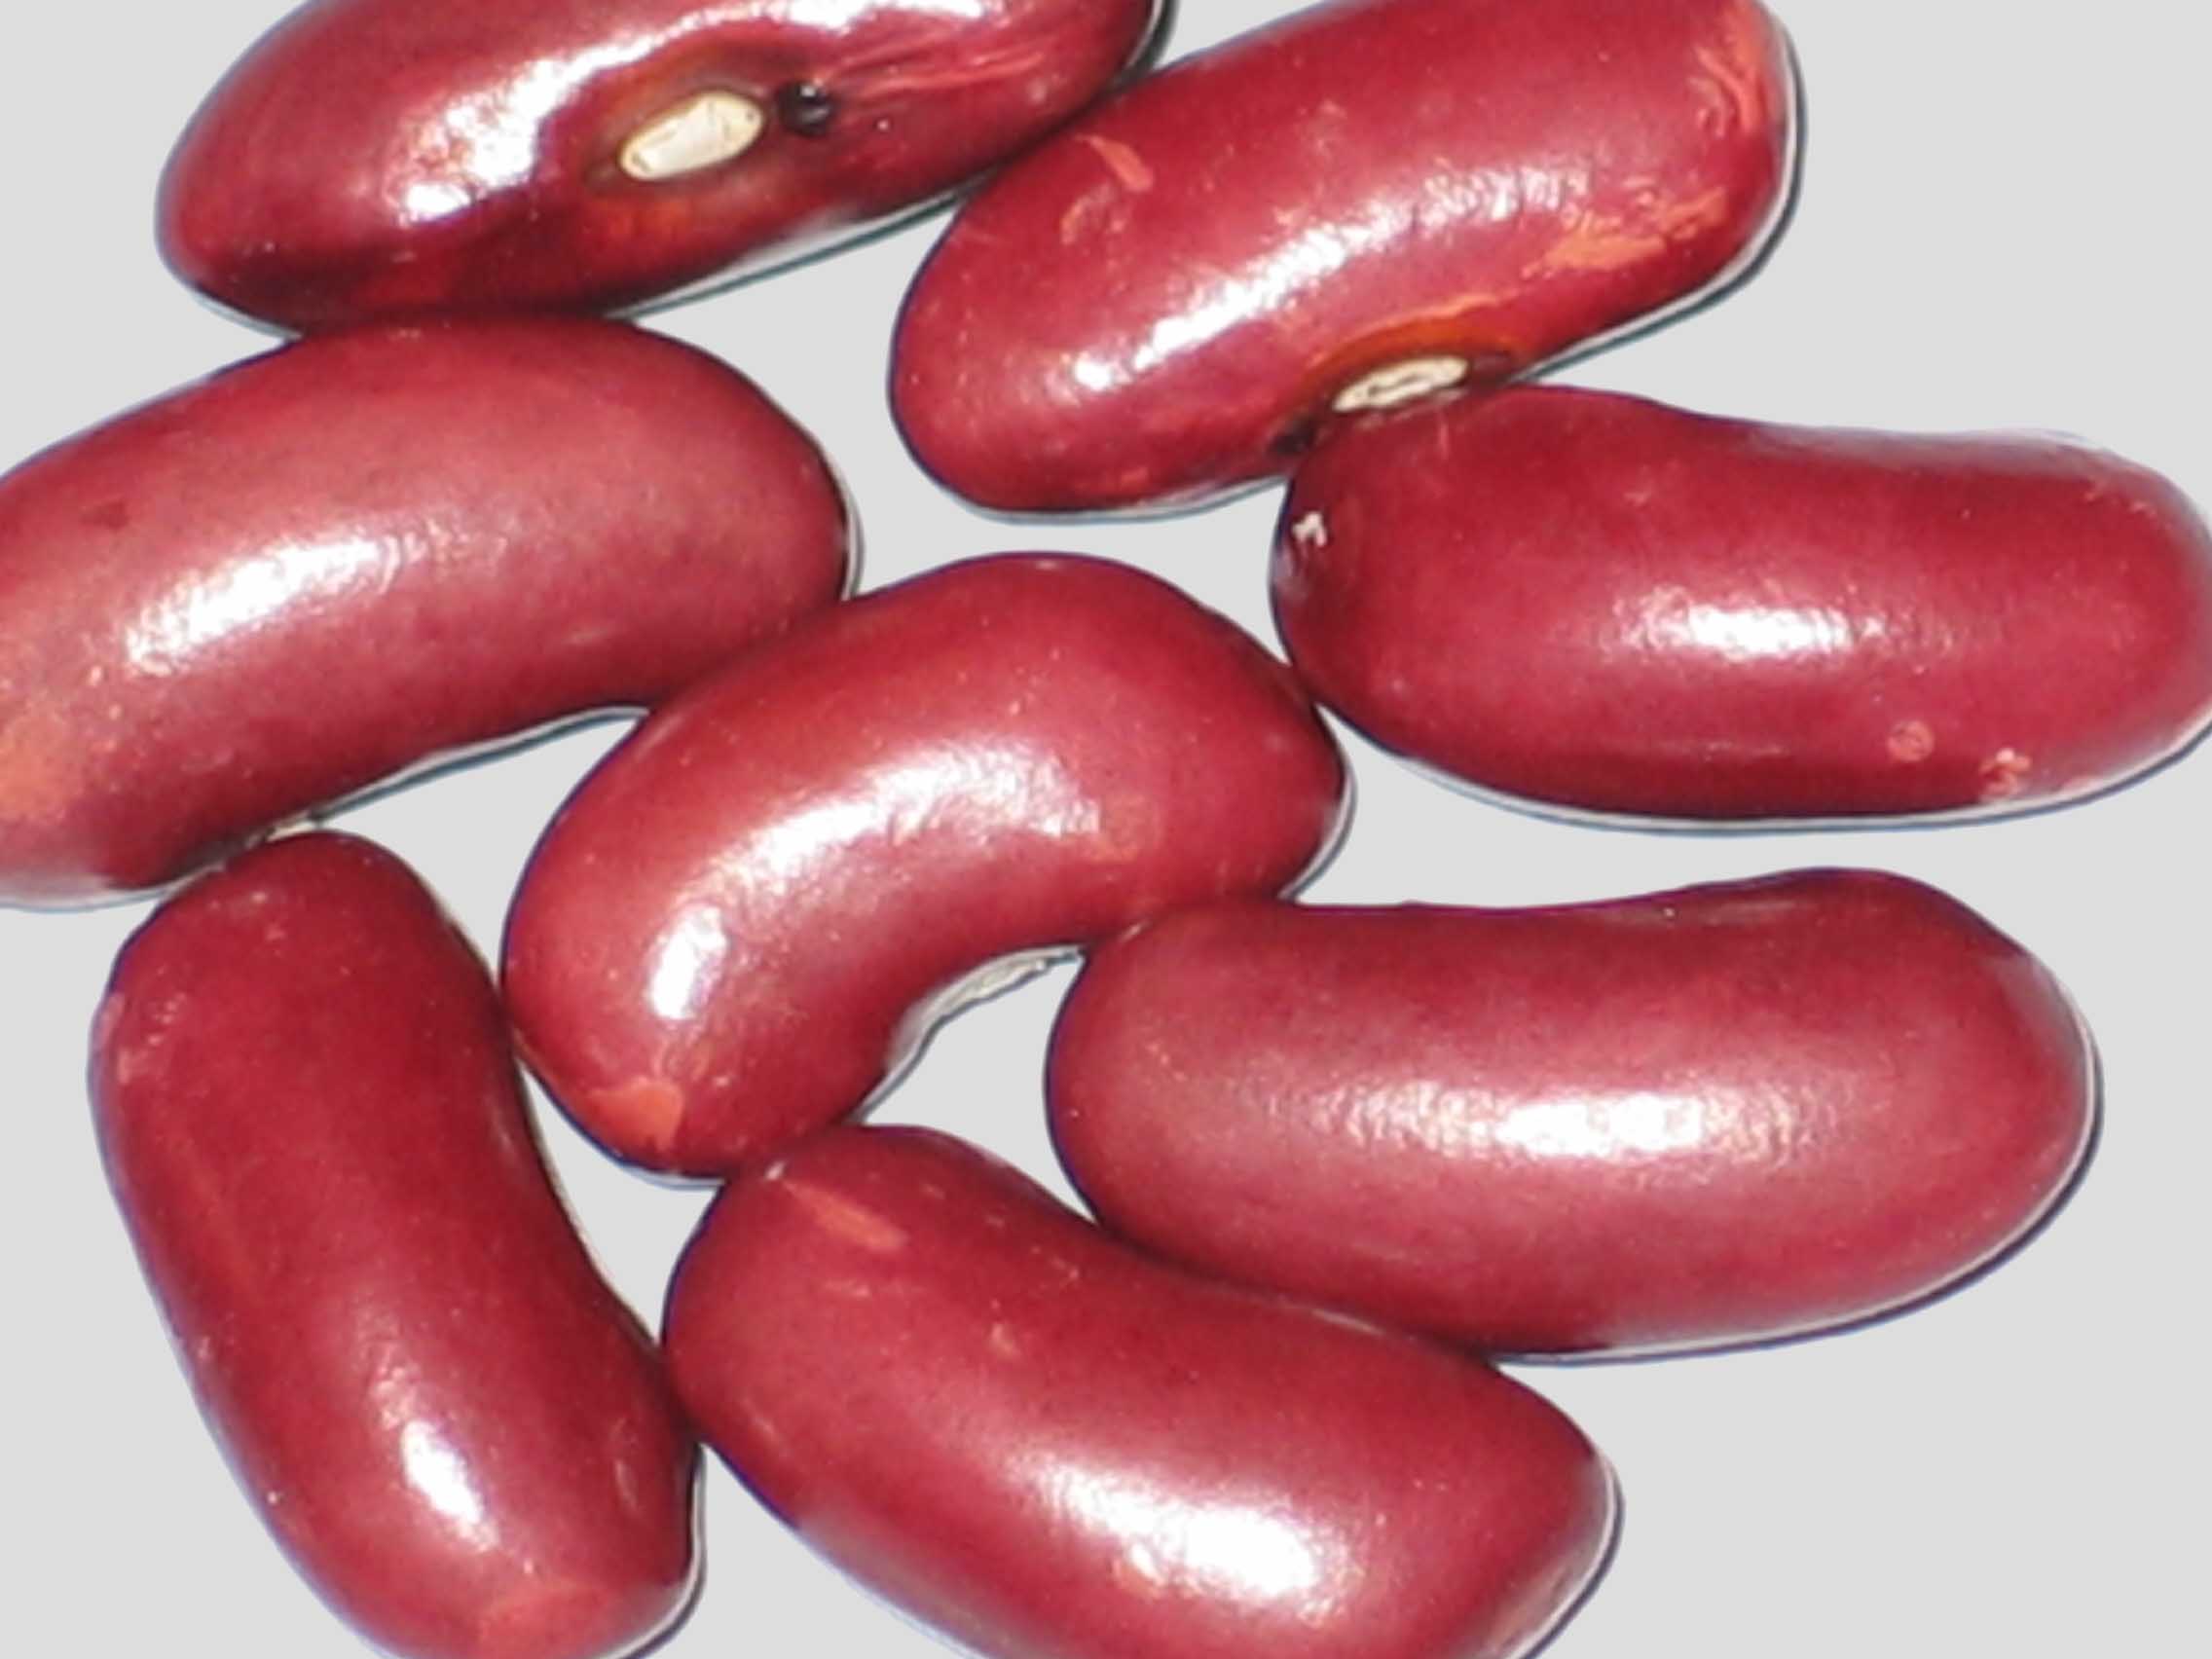 image of Clarendon Wonder beans